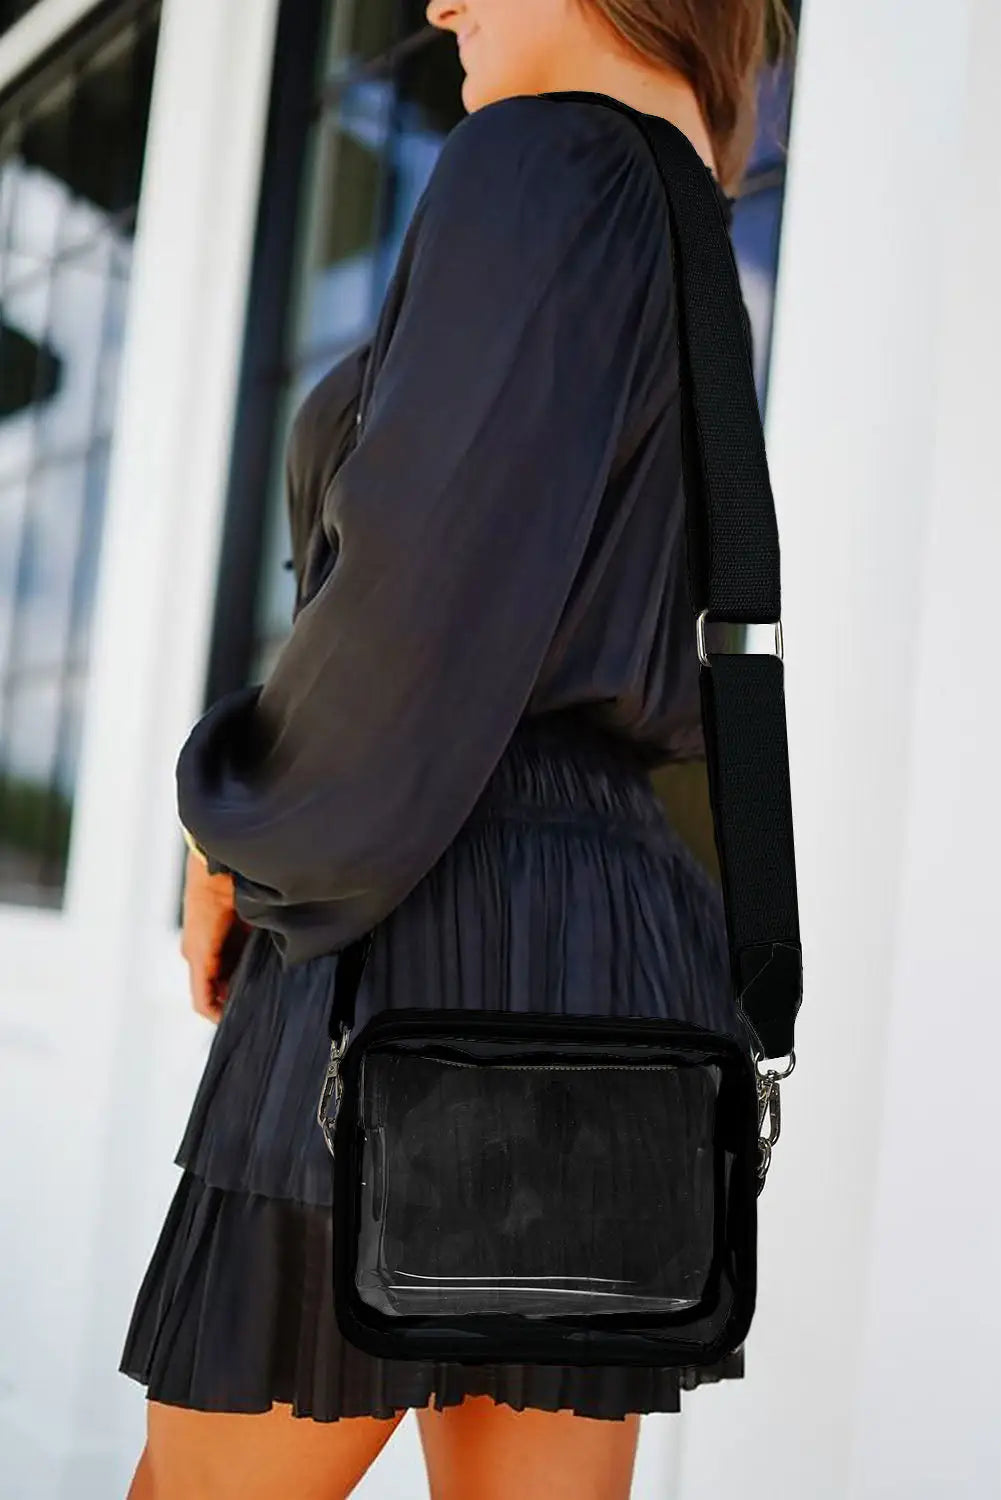 Black clear pvc leather strap crossbody bag - bags